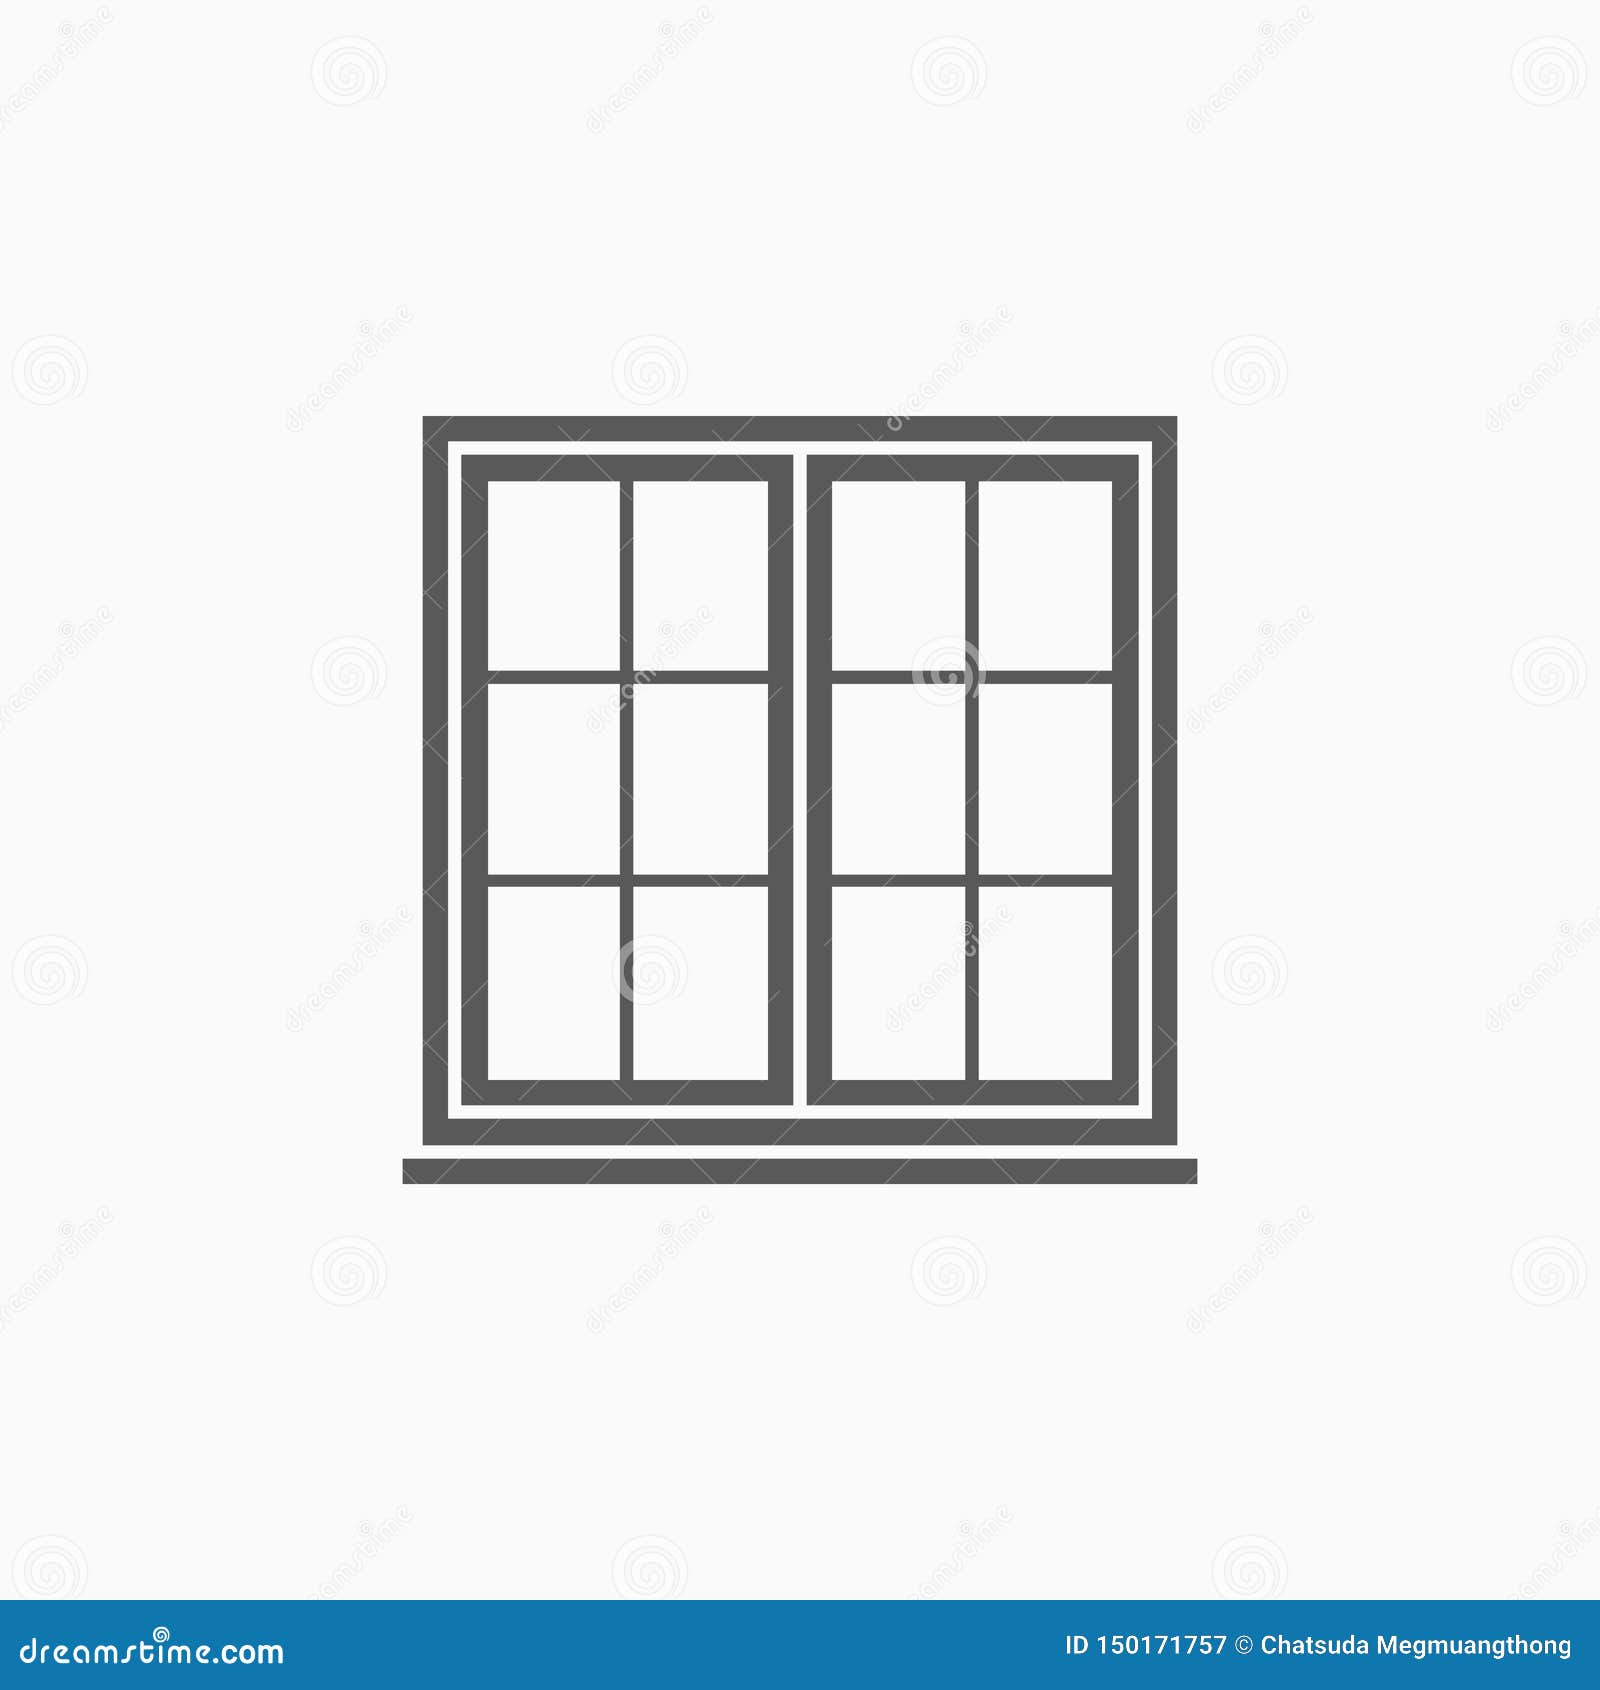 window icon, casement, house, glass